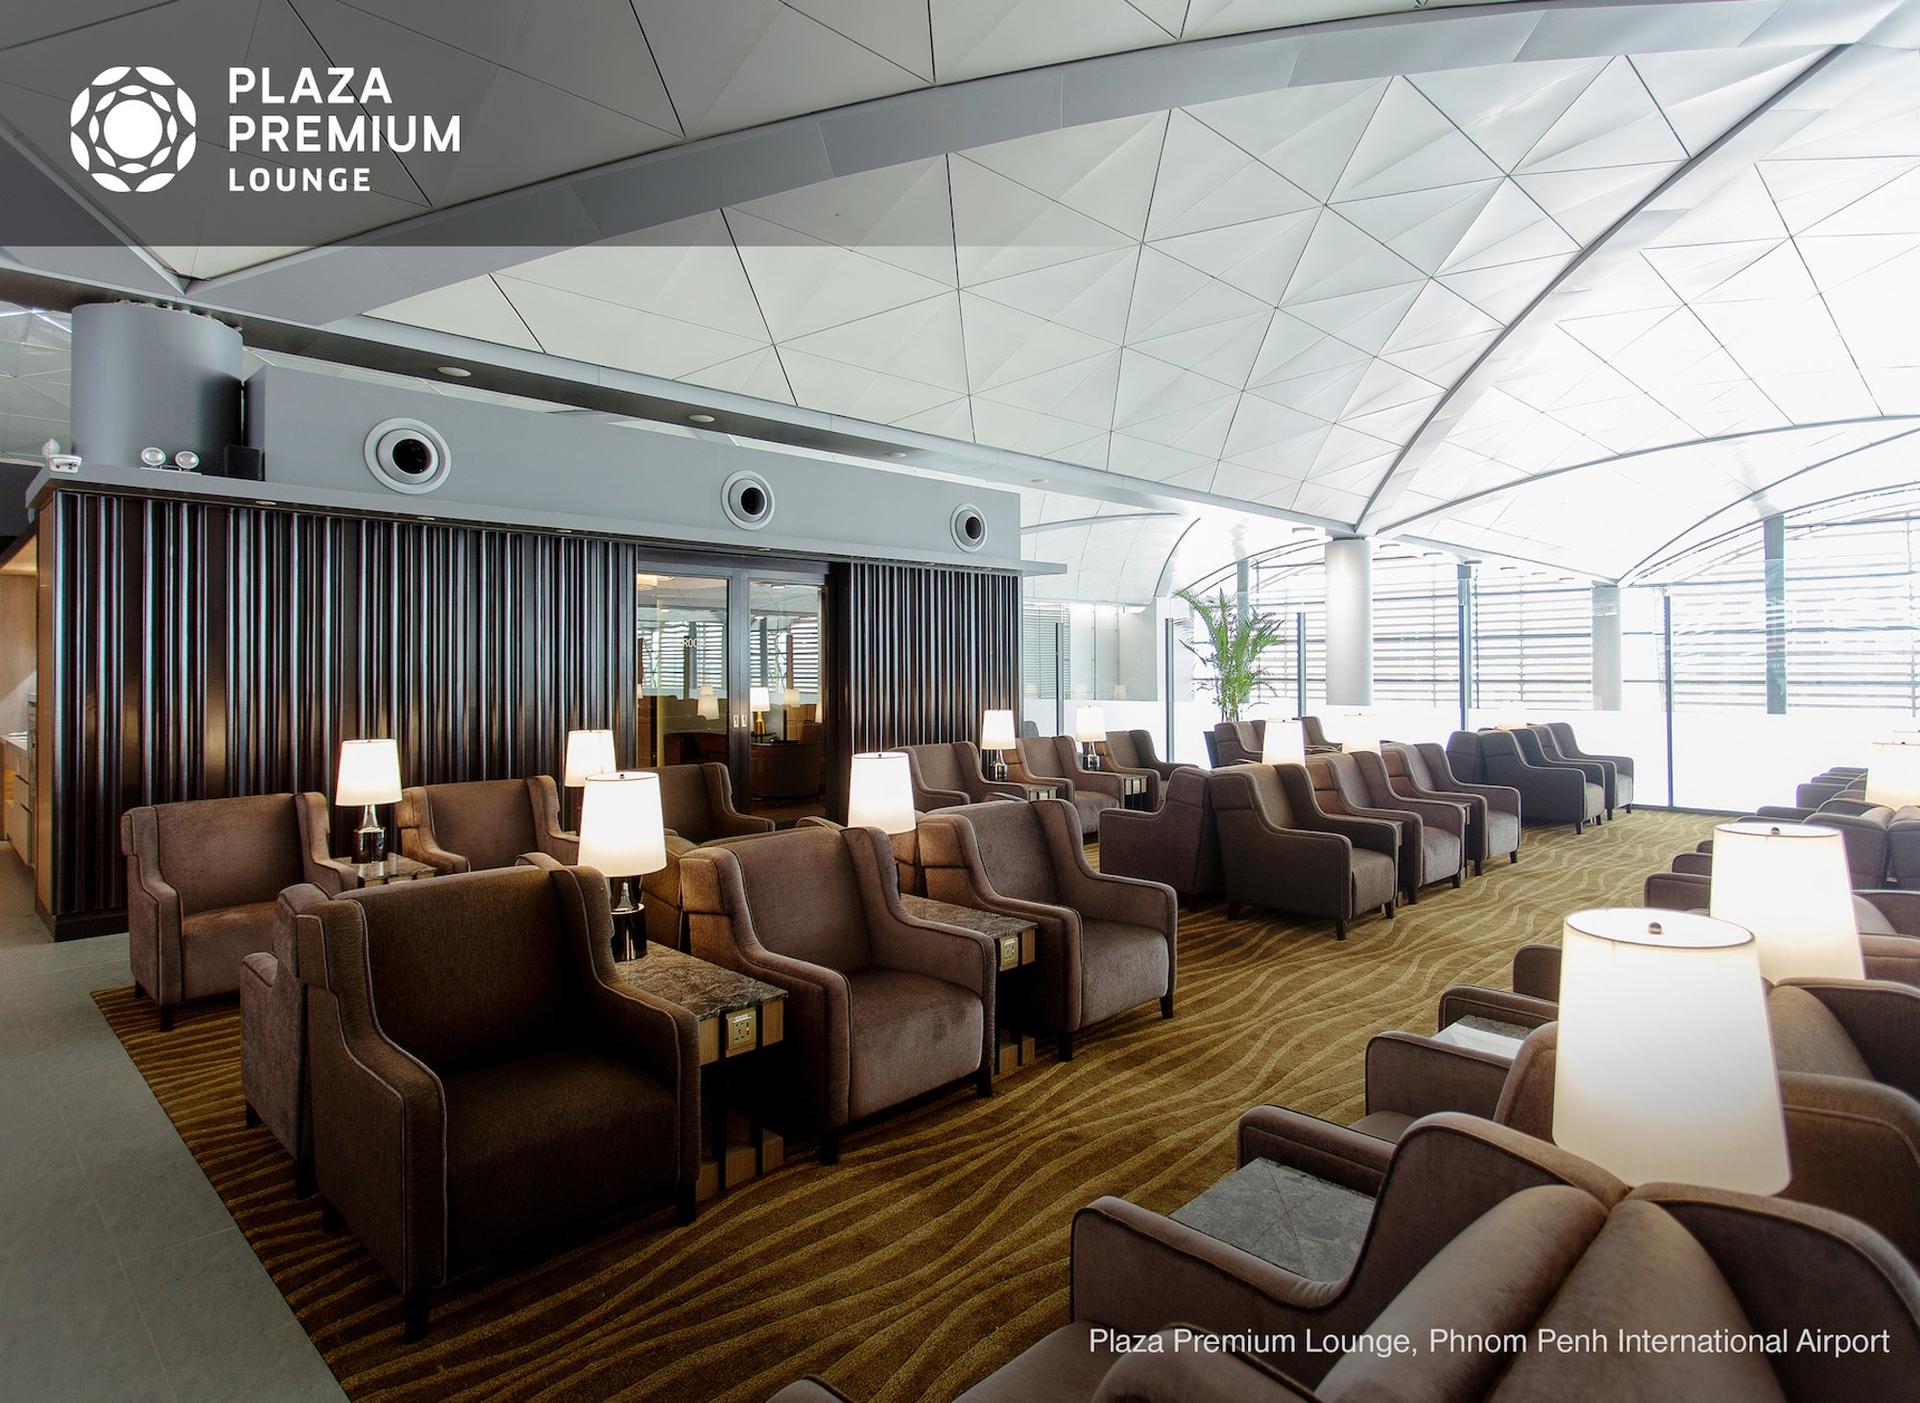 Plaza Premium Lounge image 28 of 34